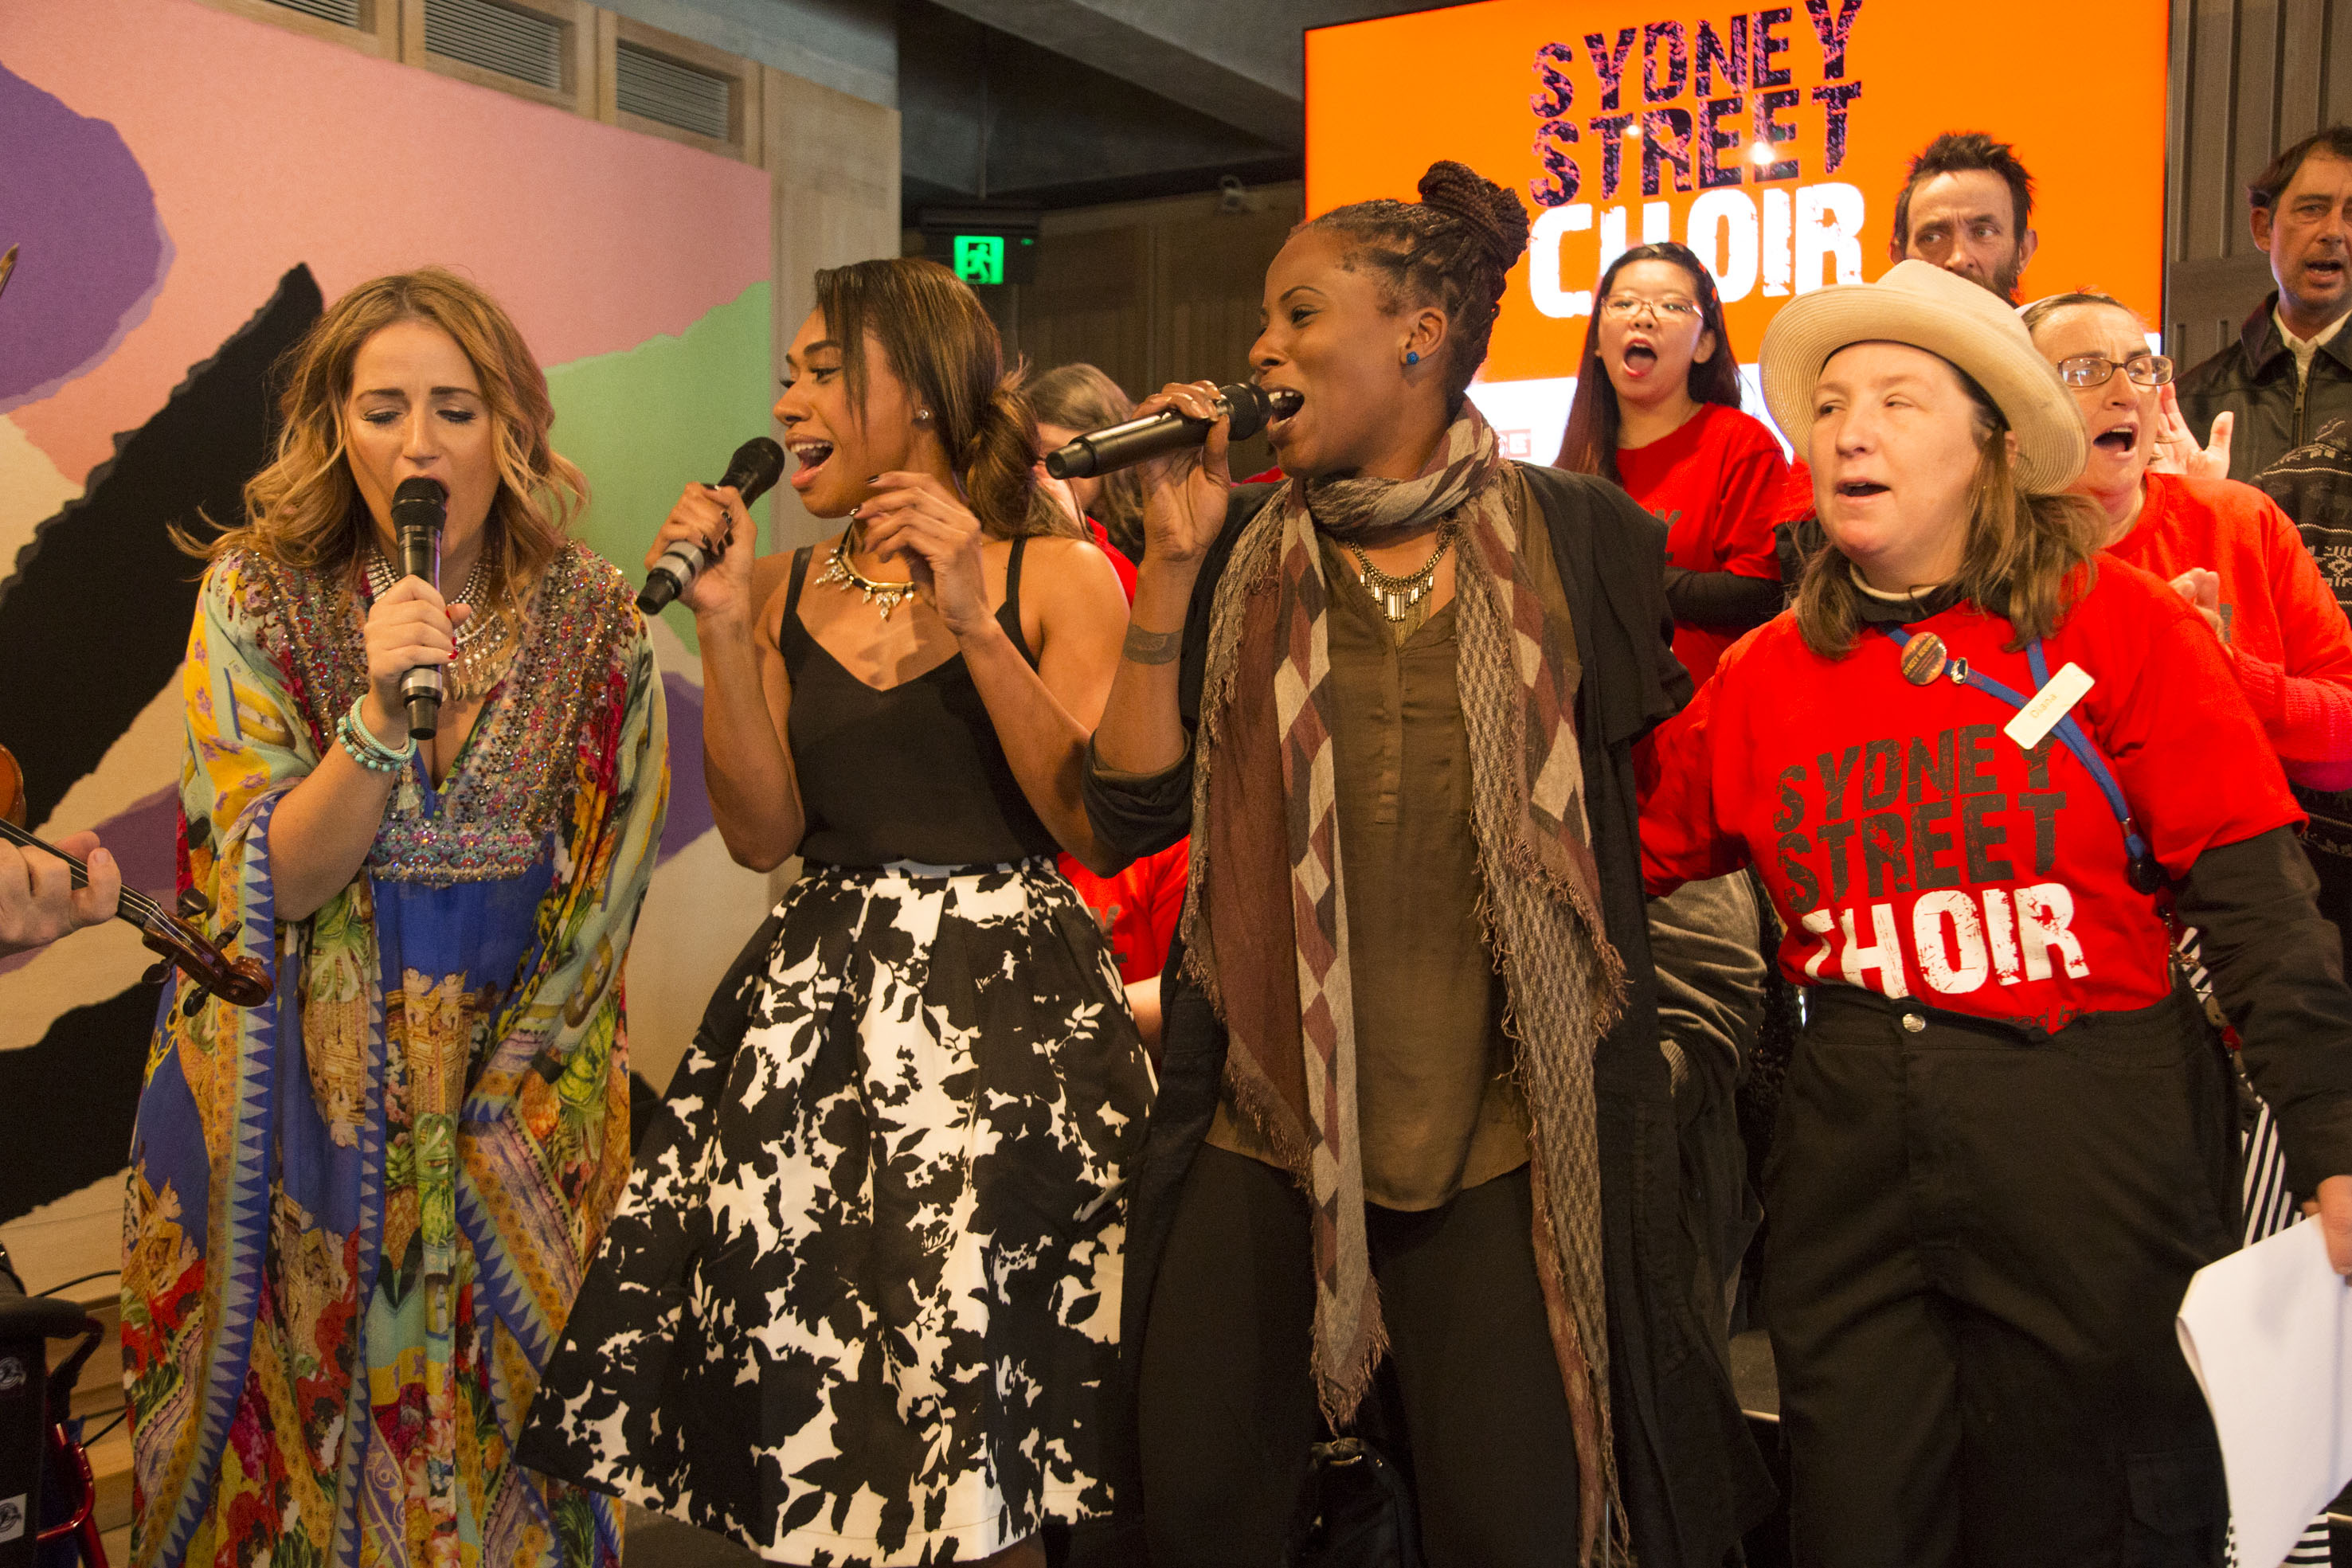 Sydney Street Choir Sings up a Storm at Opera House Relaunch